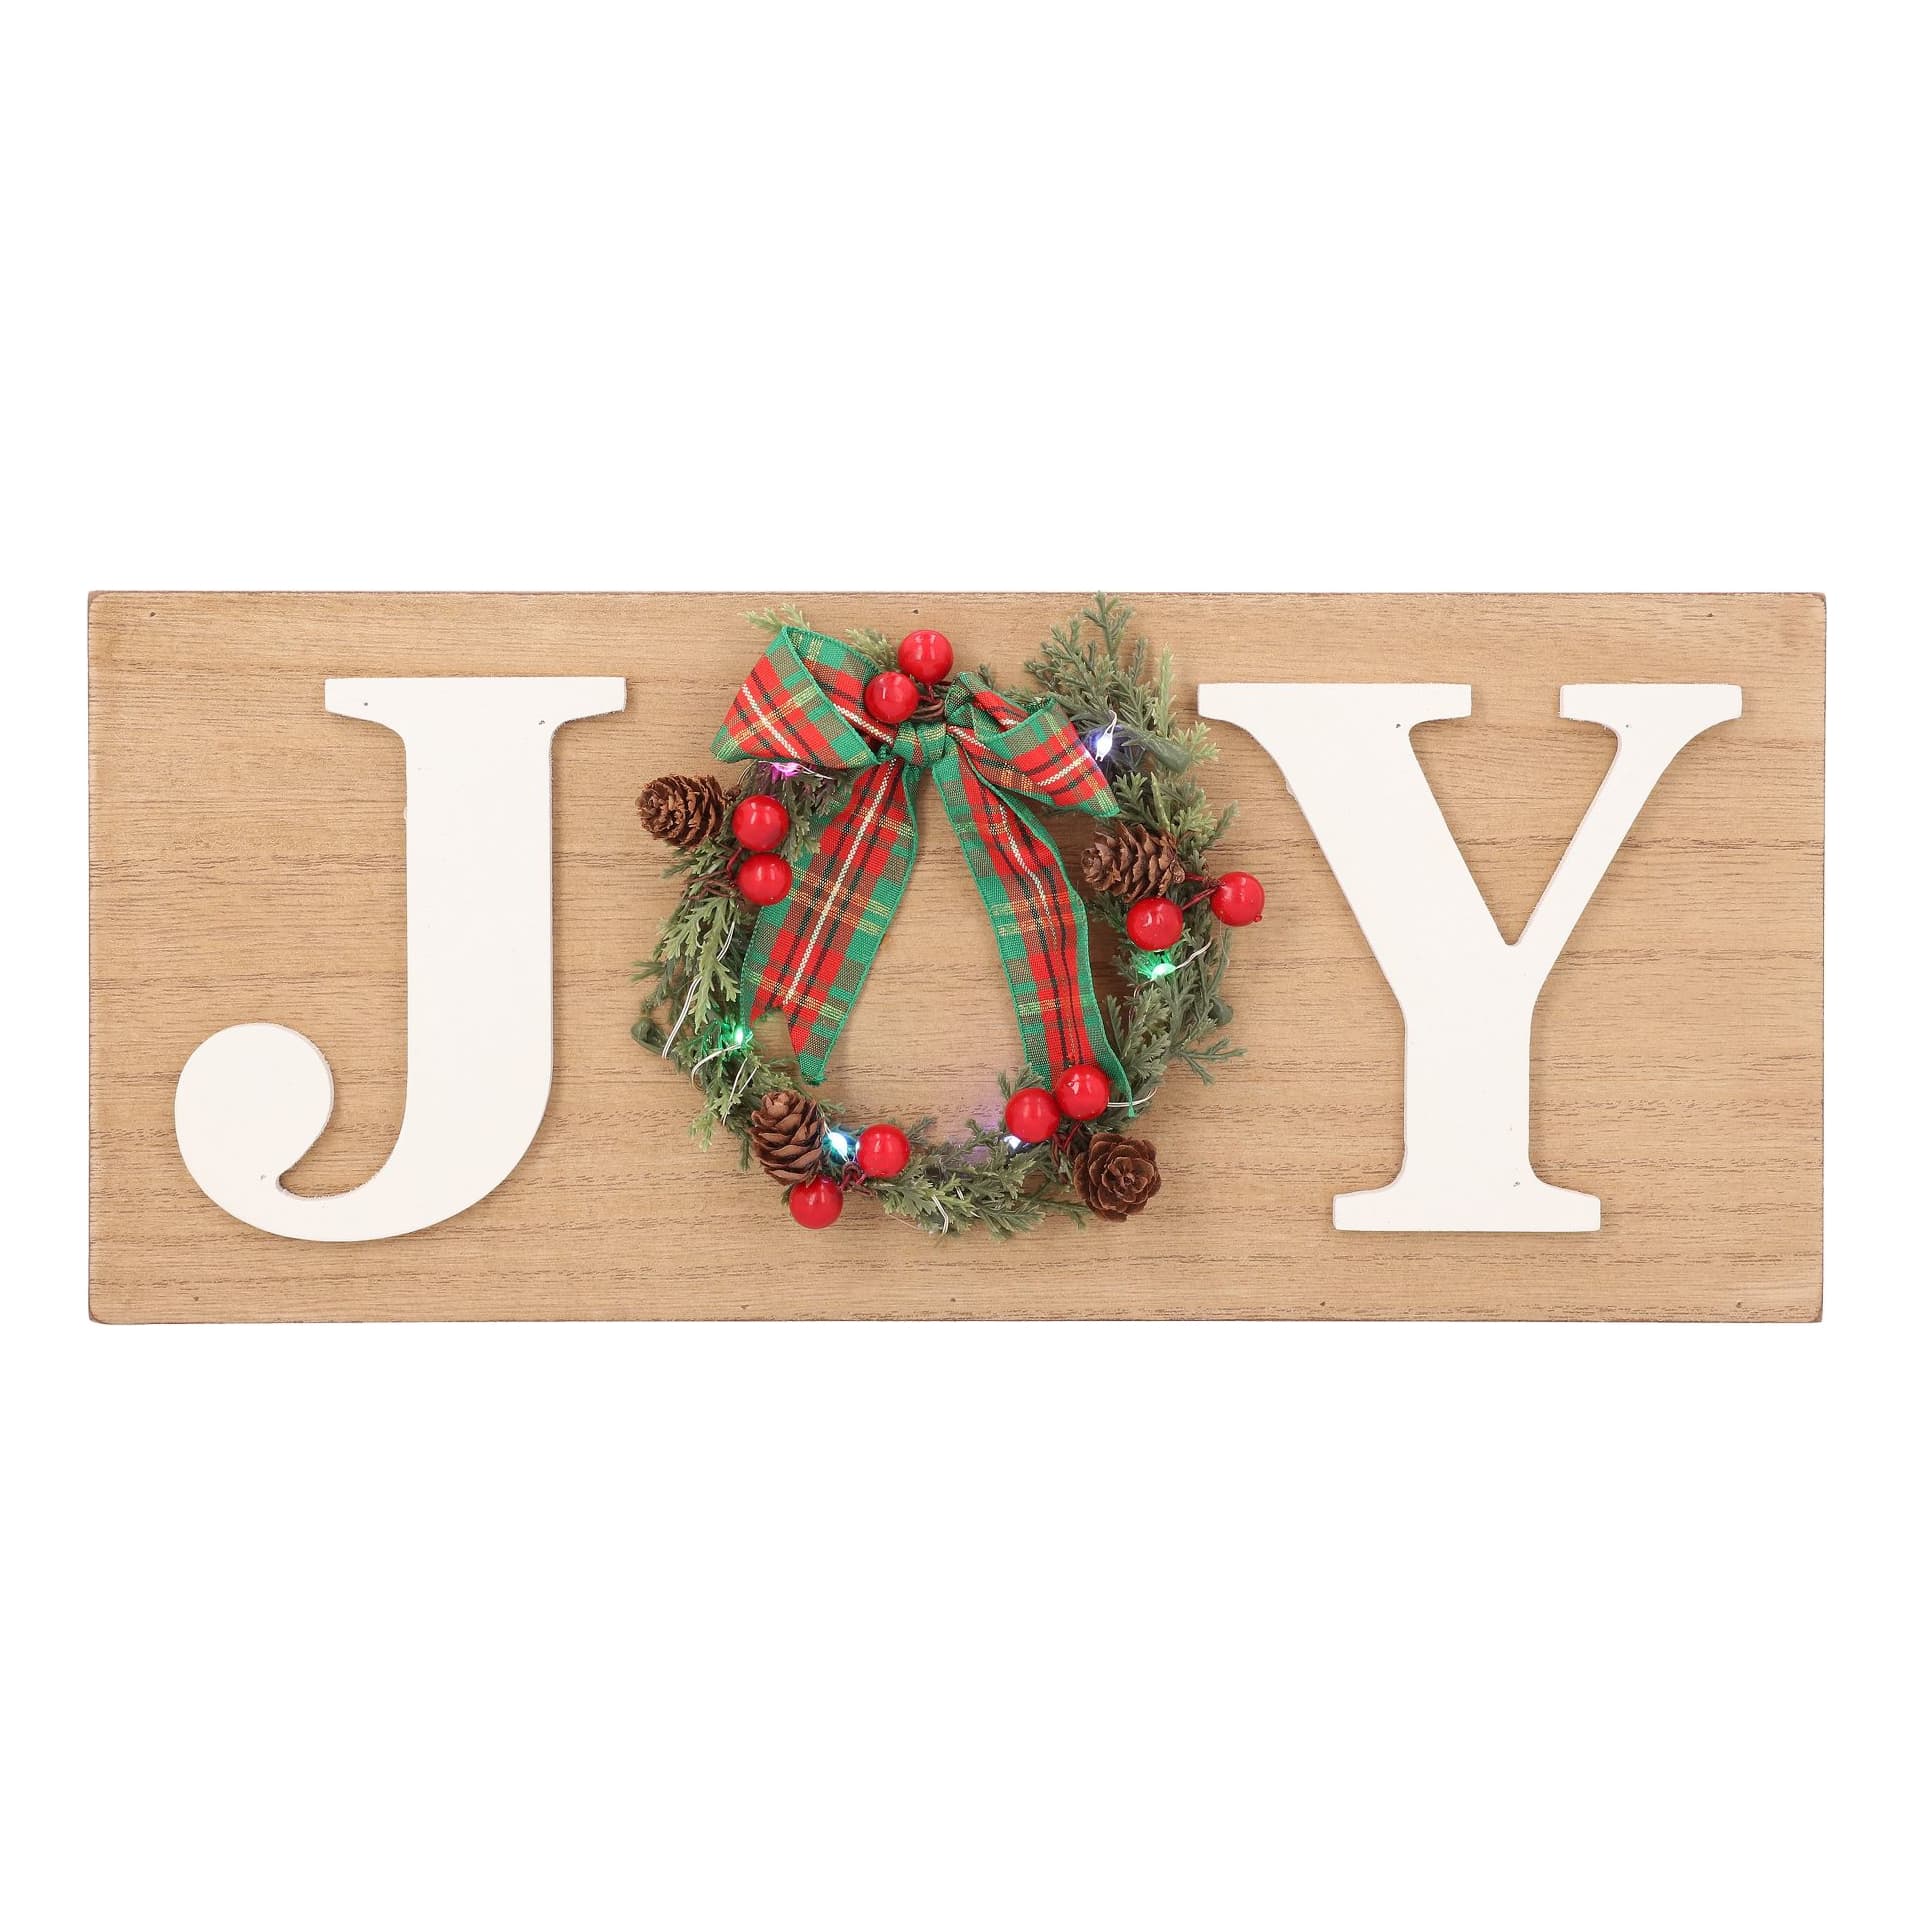 Bass Pro Shops® Joy Wood Sign with Light-Up Wreath